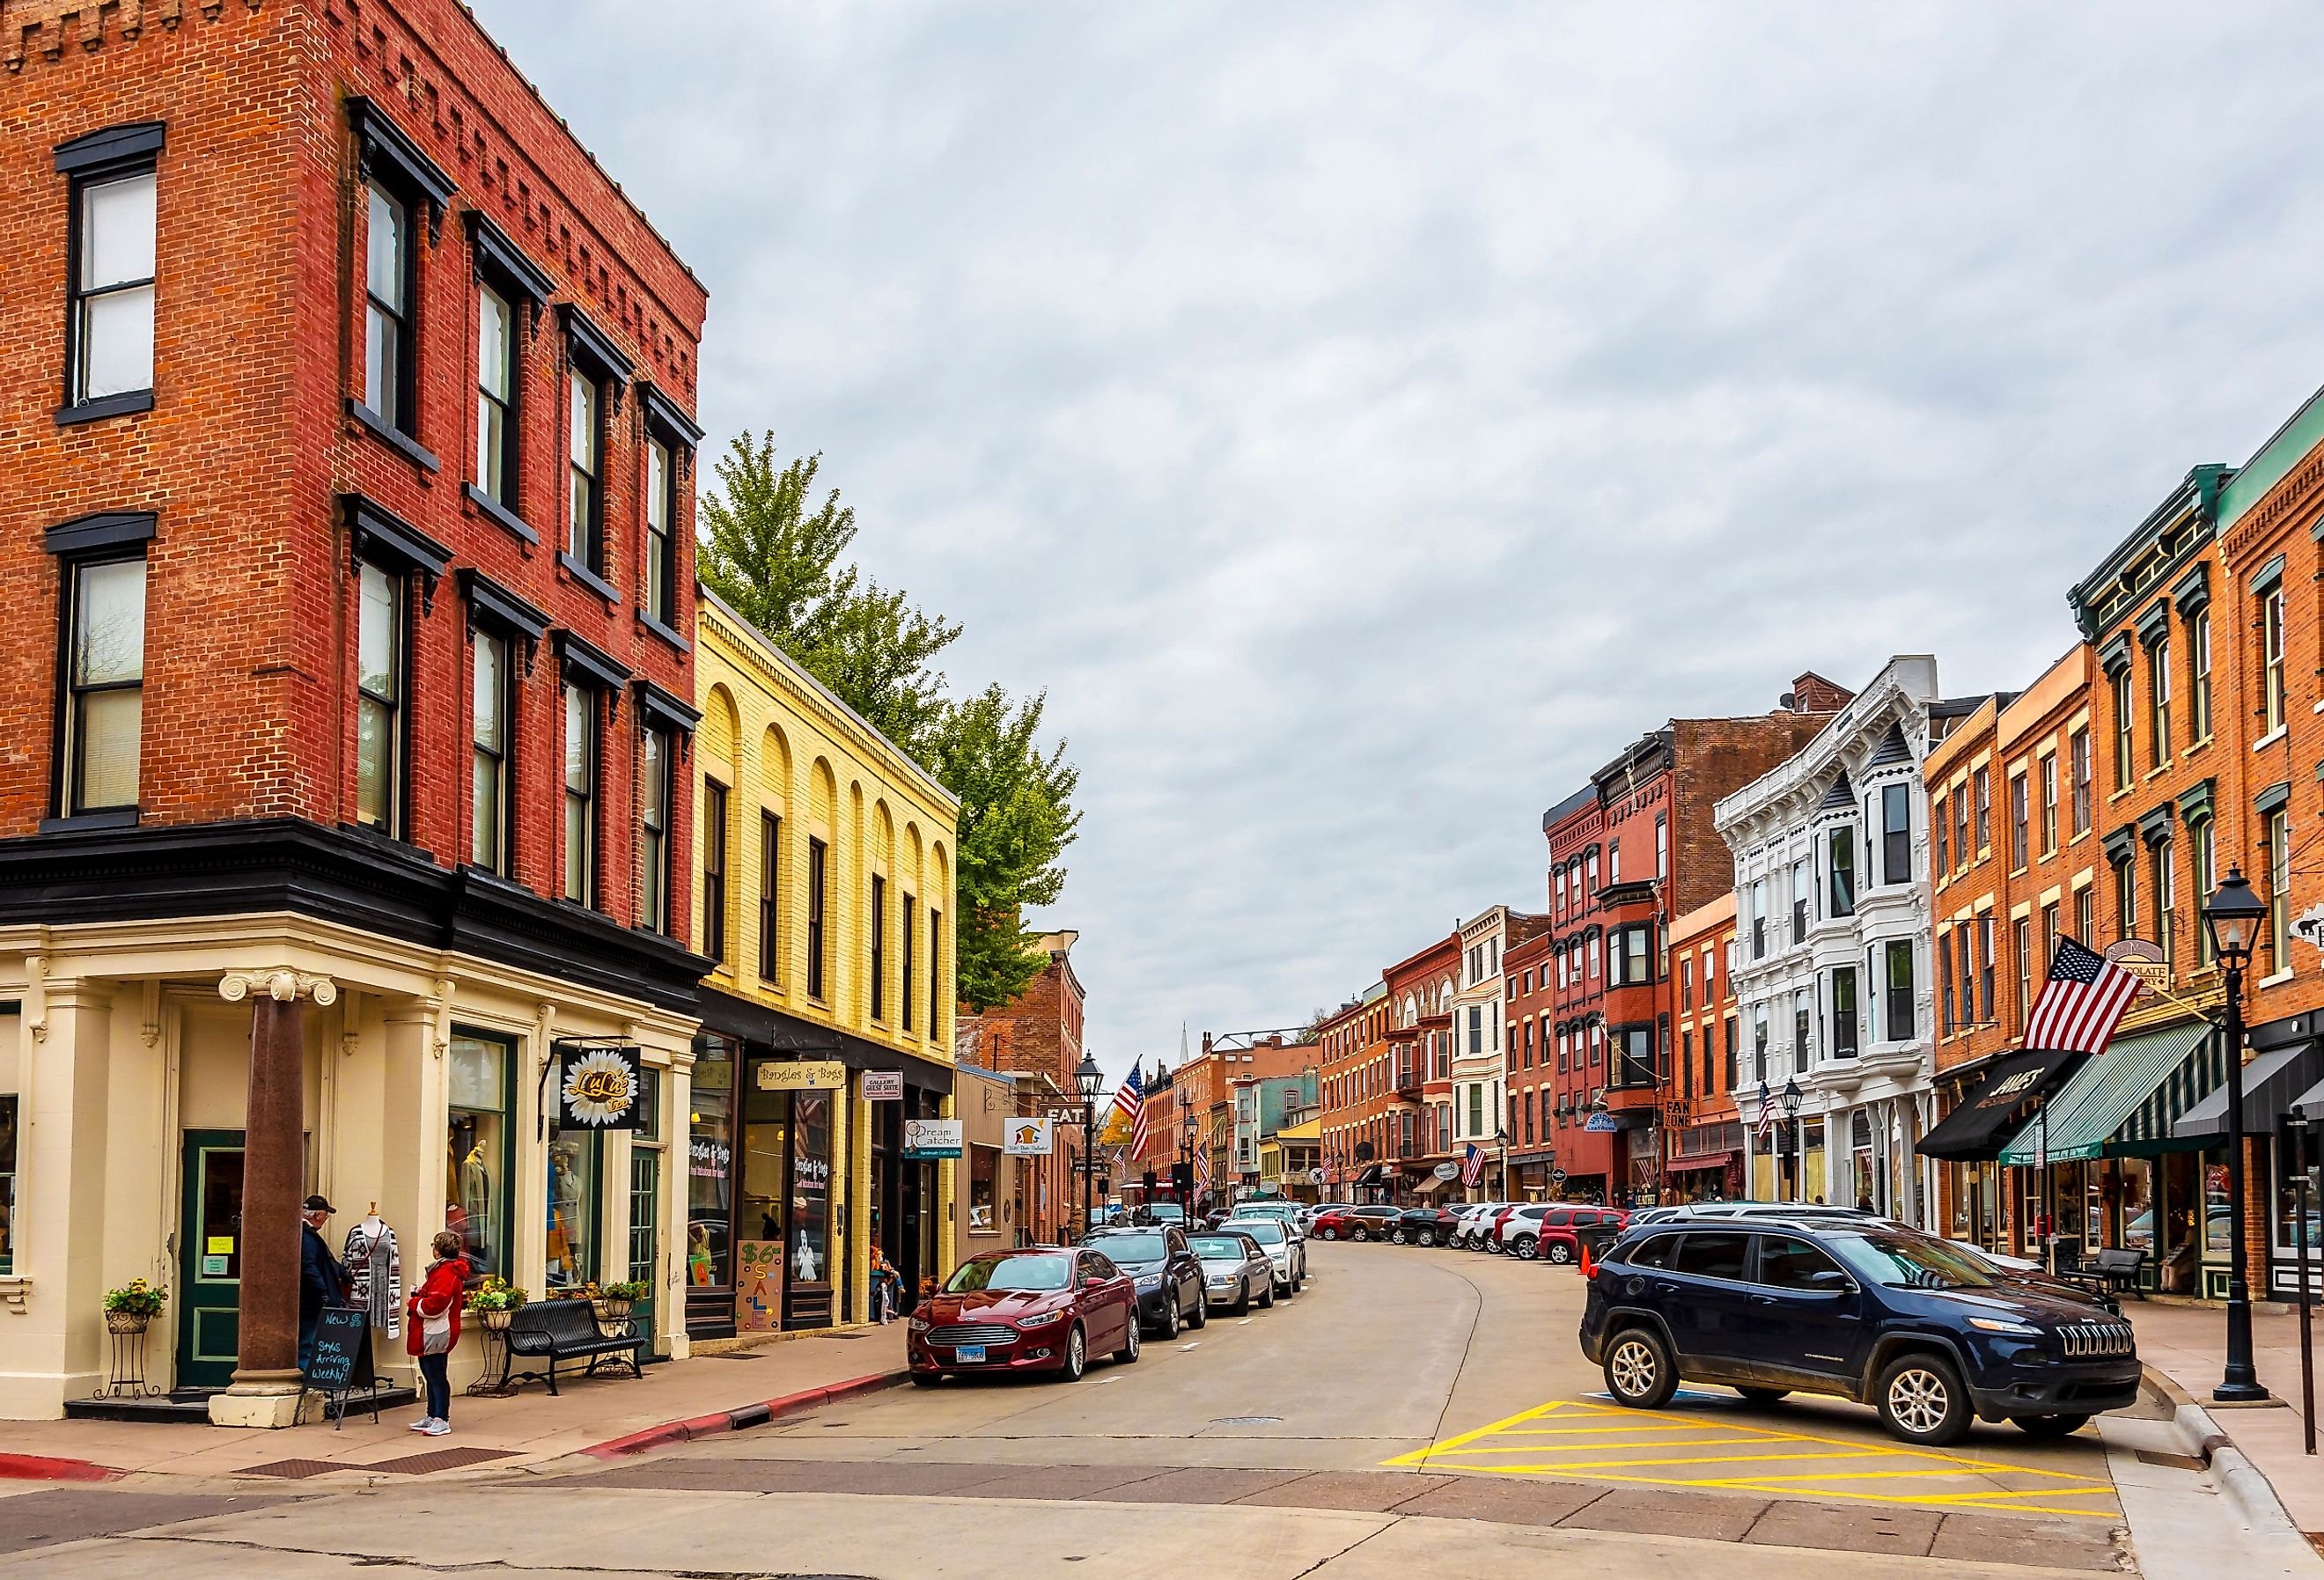 Historical Galena Town Main Street in Illinois of USA. Image credit Nejdet Duzen via Shutterstock.